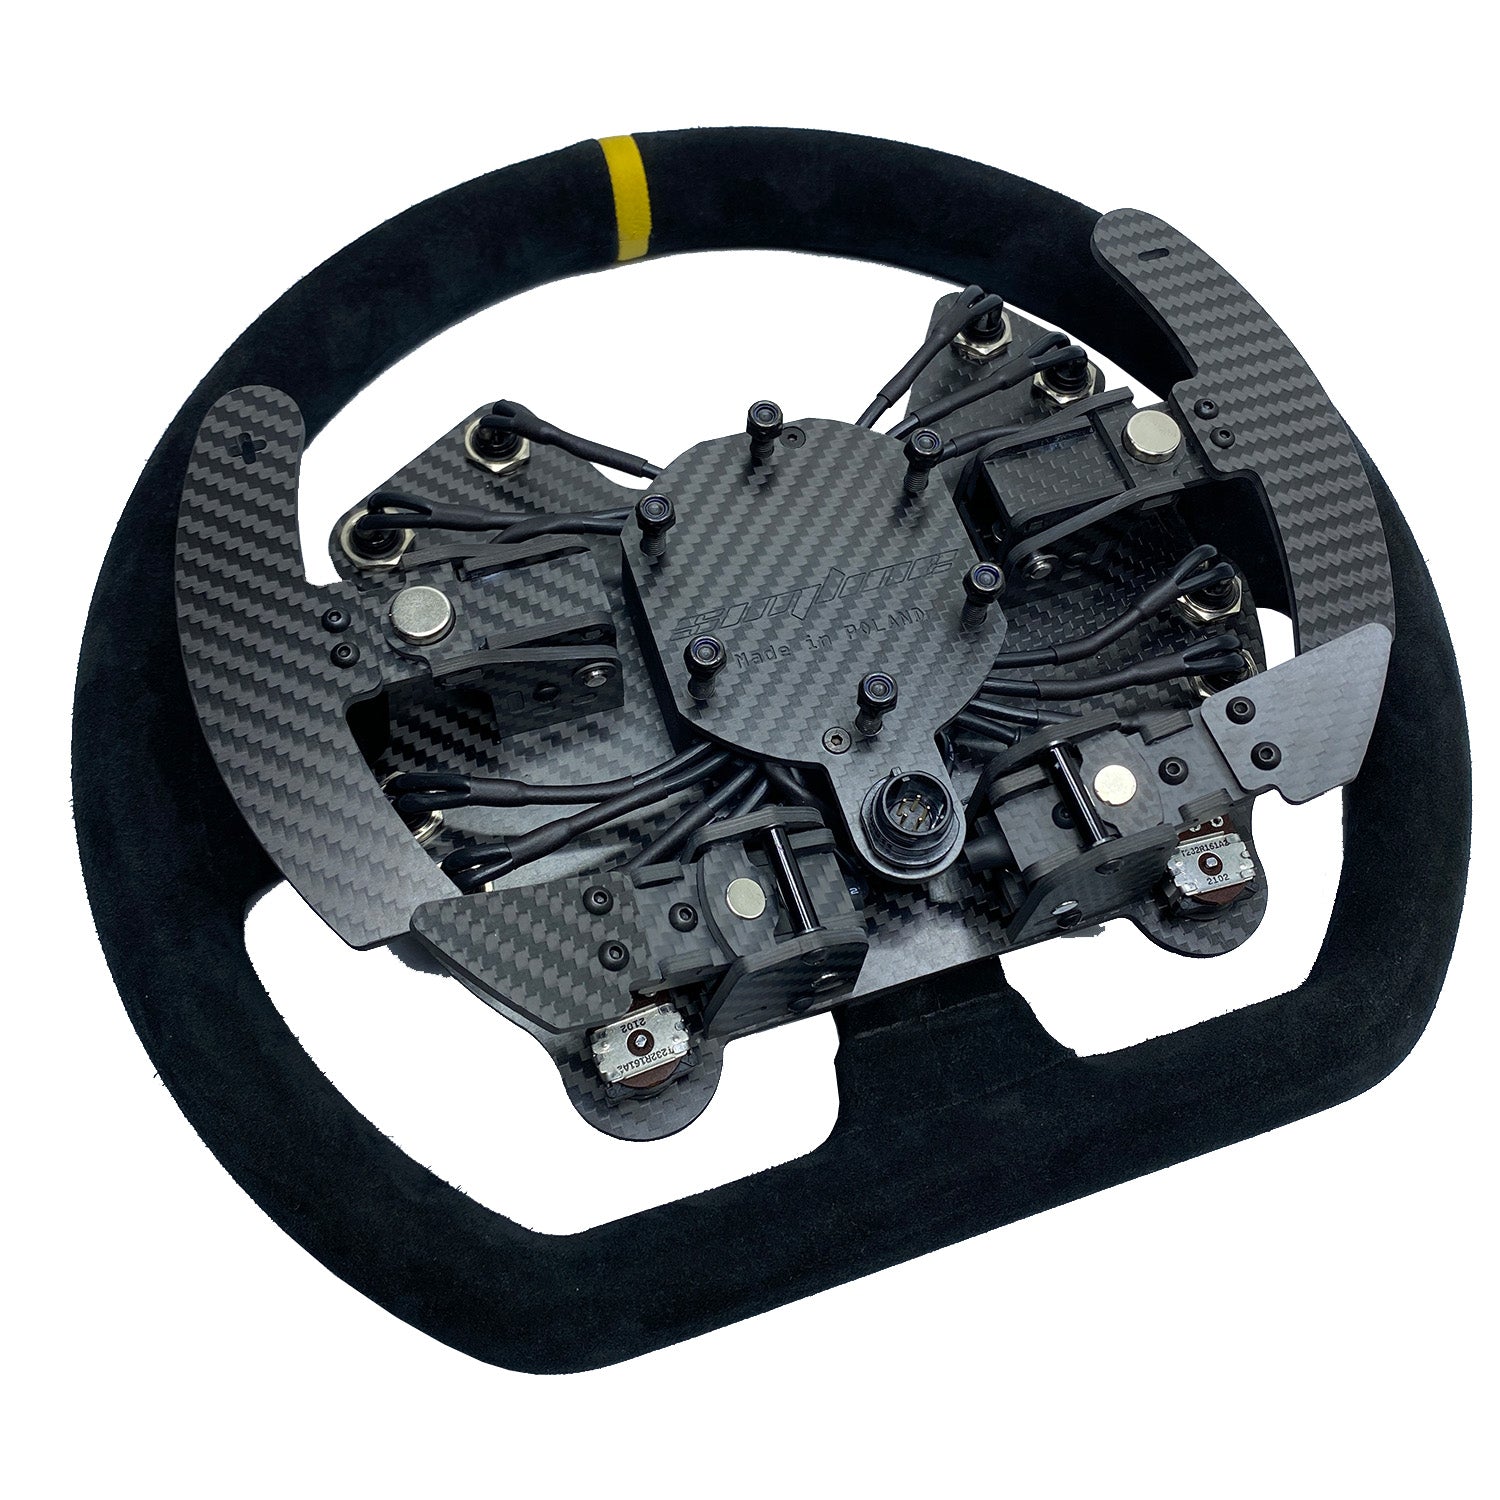 SimLine GT3-R Dual Clutch Replica Wheel (Wired)